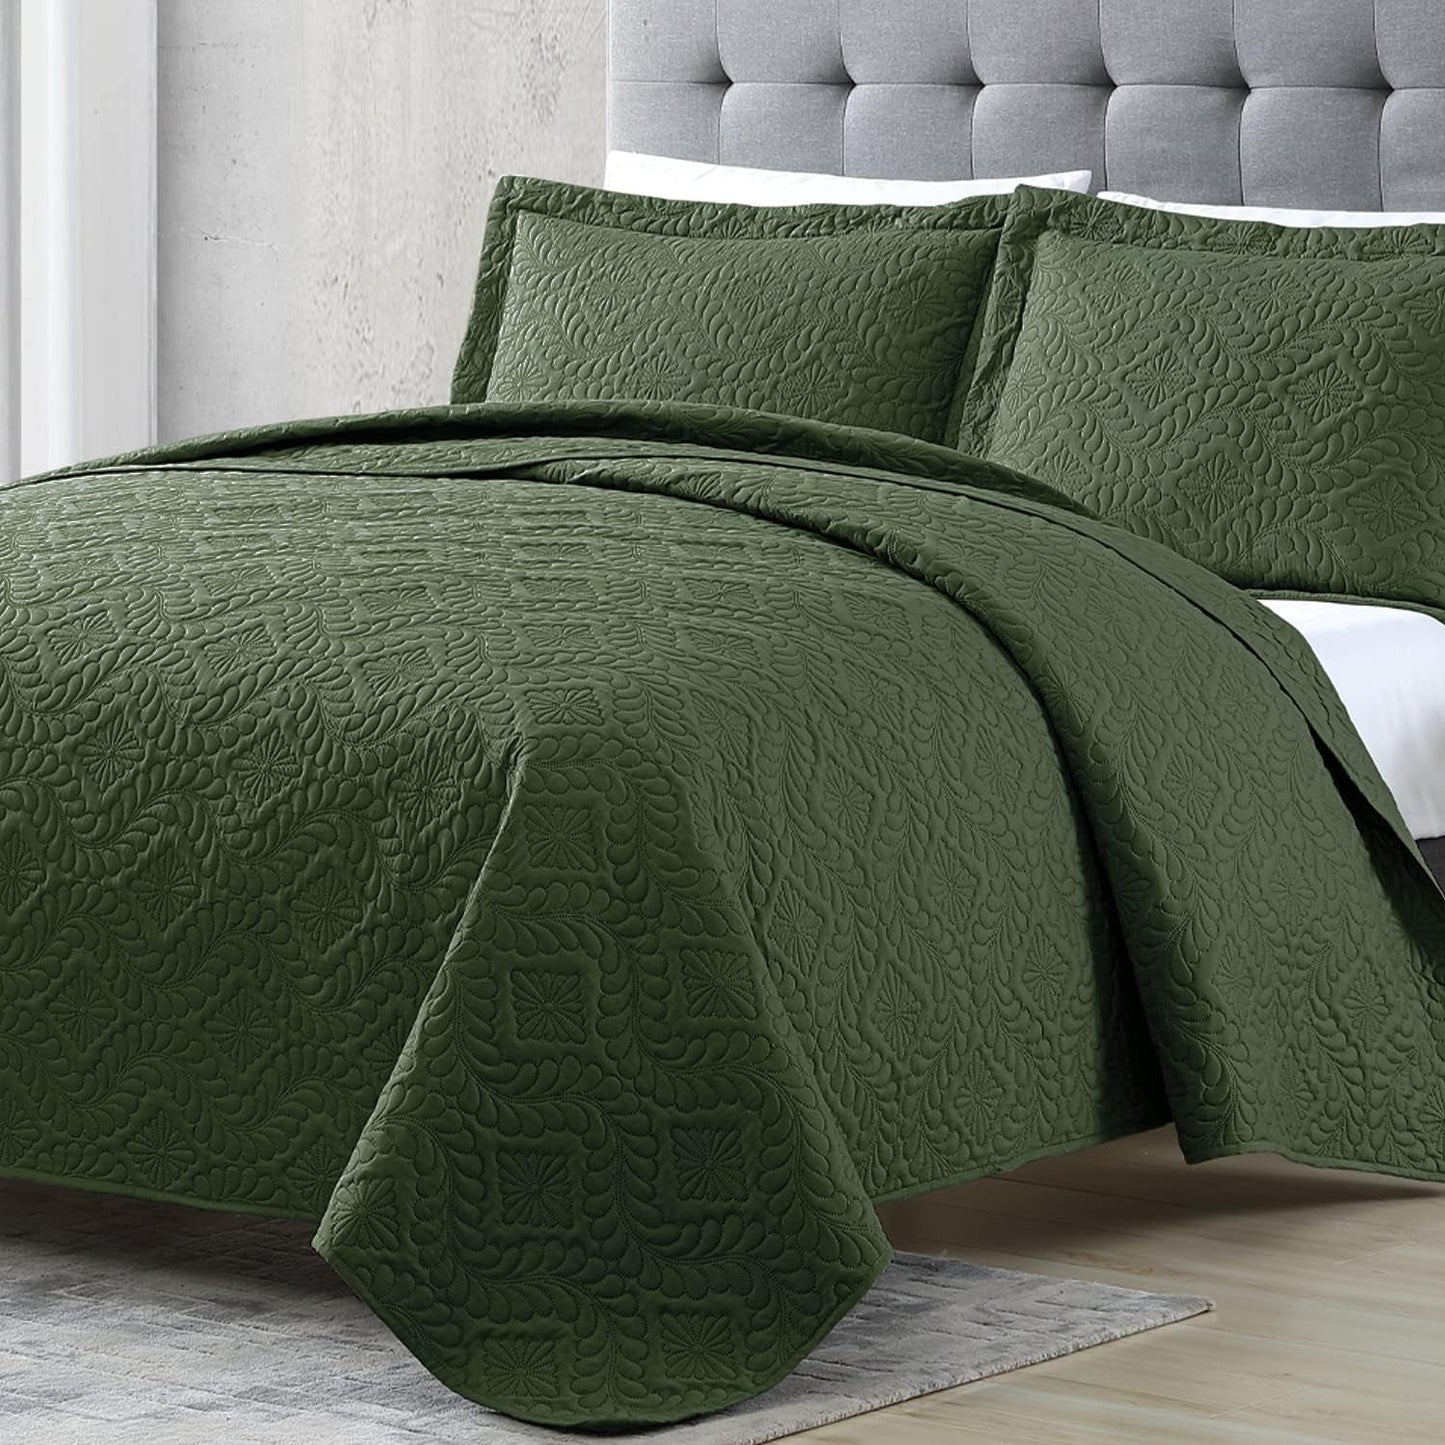 EXQ Home Quilt Set Full/Queen Size Olive Green 3 Piece,Lightweight Coverlet Modern Style Wheat Pattern Bedspread Set(1 Quilt,2 Pillow Shams)